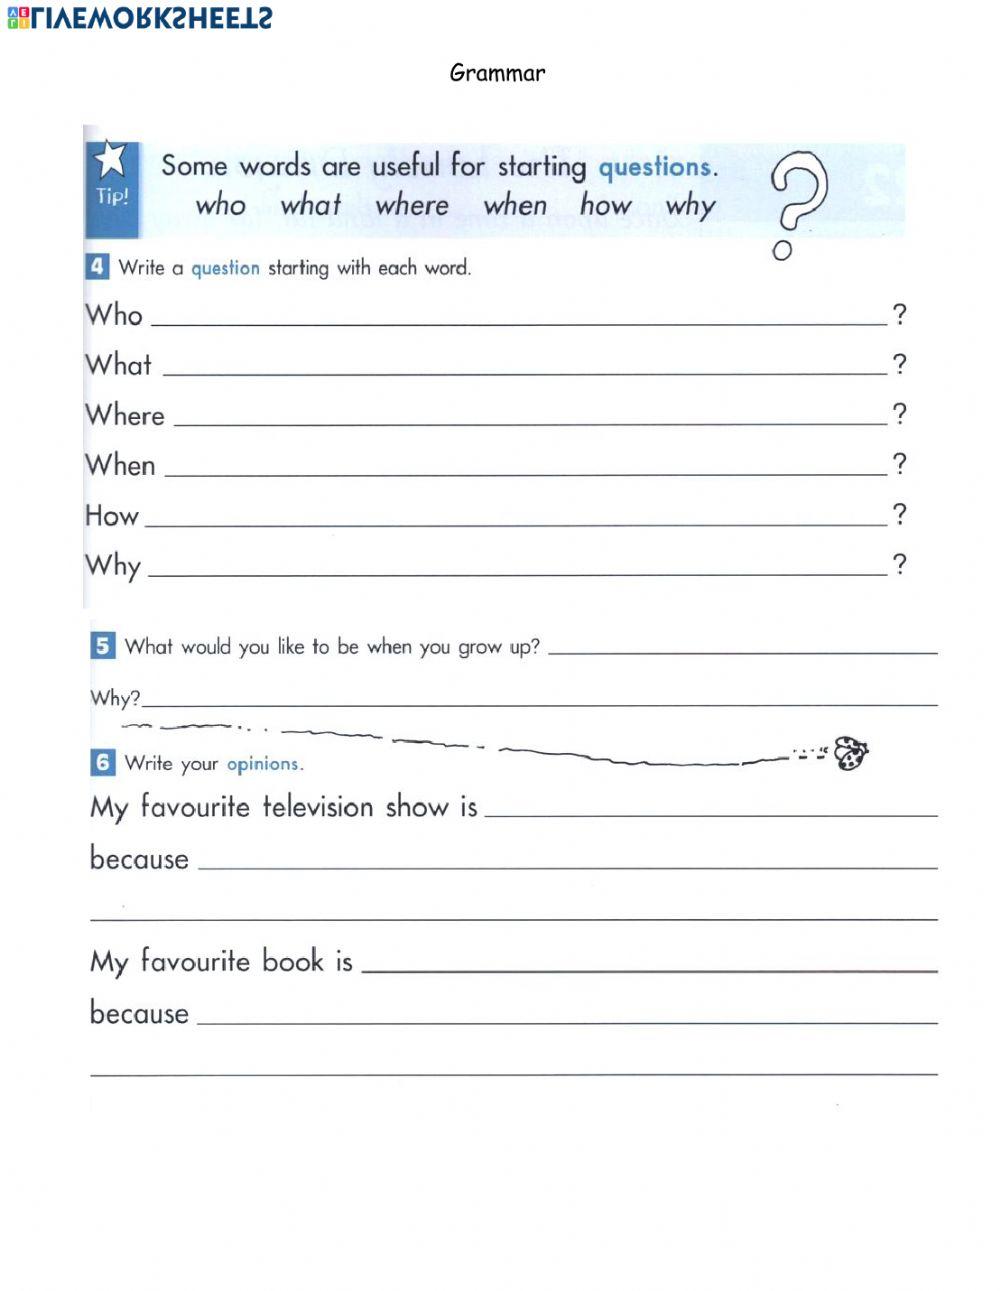 Grammar questions page 11 April 20